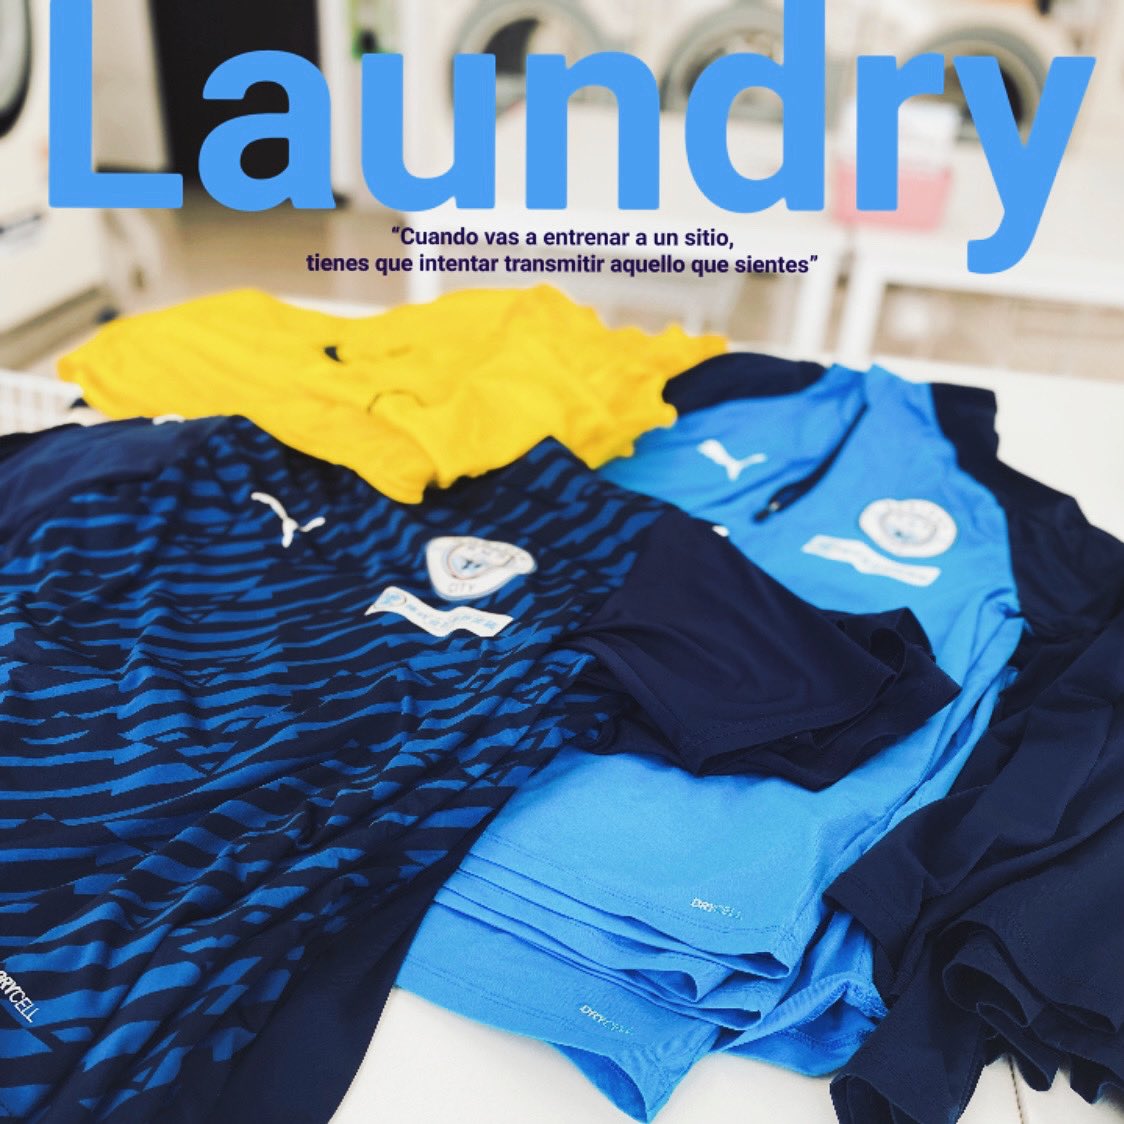 #laundry
#laundryday 
👕👖🧺🧼

#puma 
#pumafootball 
🐆⚽️

#岩手県 #岩手 #盛岡市 #盛岡 
#社会課題 #社会課題解決